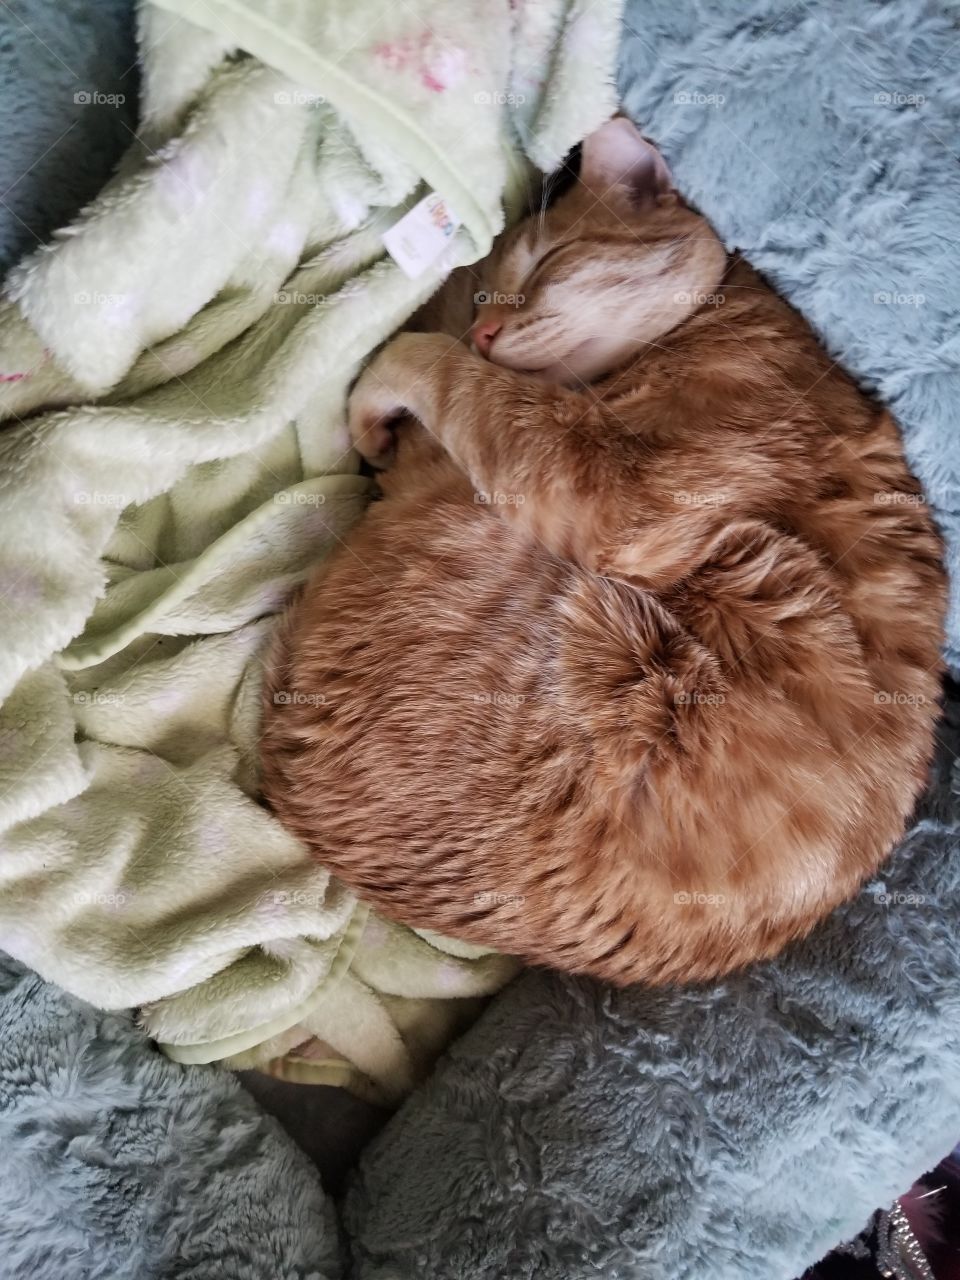 Cat cuddling himself